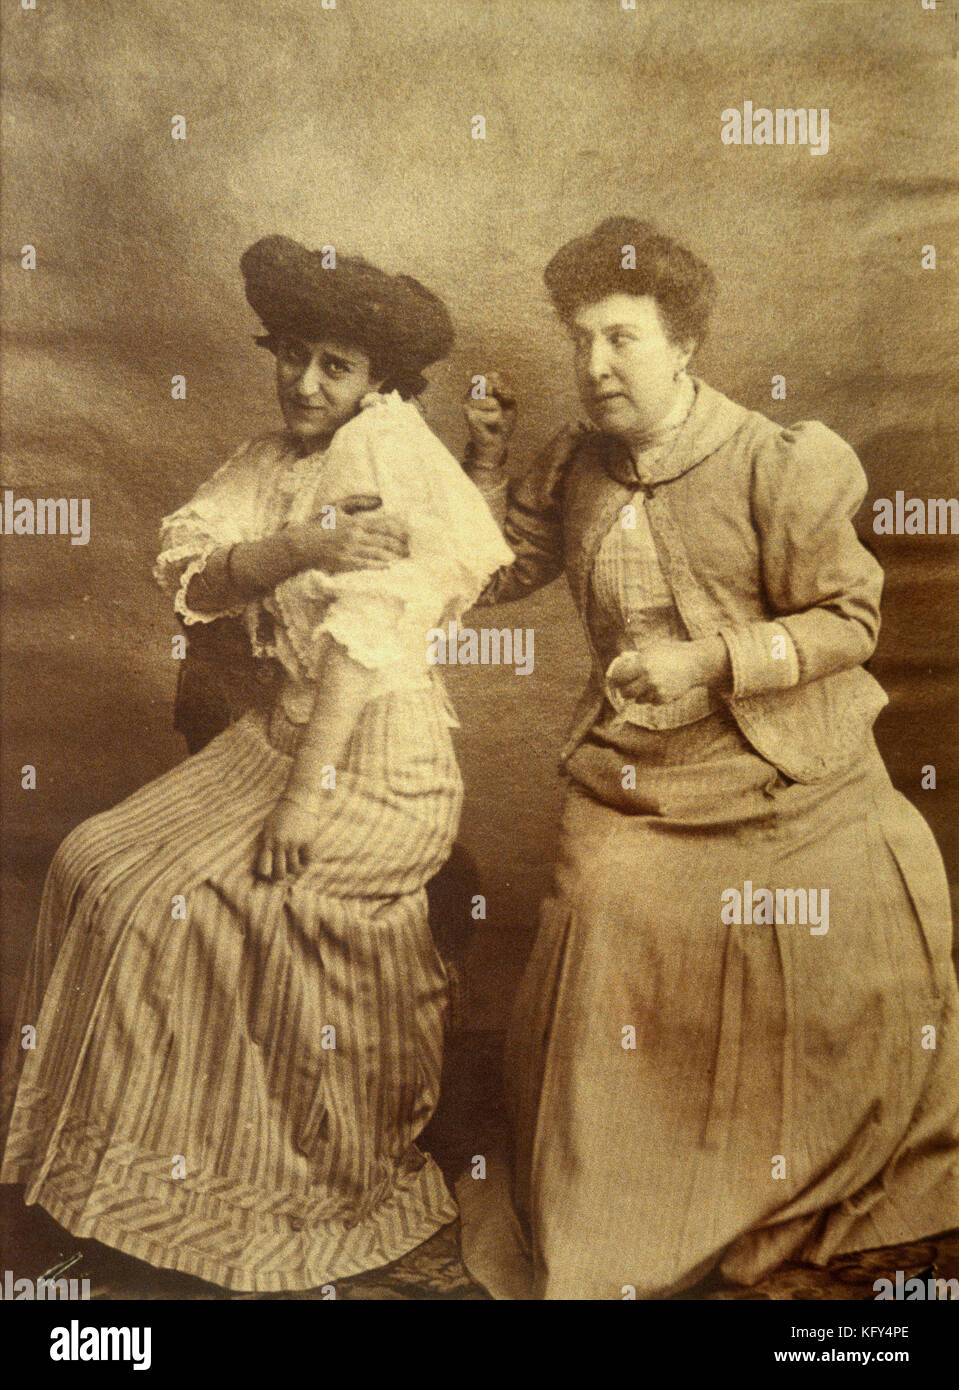 Italy Campania Naples- Politeama Theater actresses of the early twentieth century Stock Photo